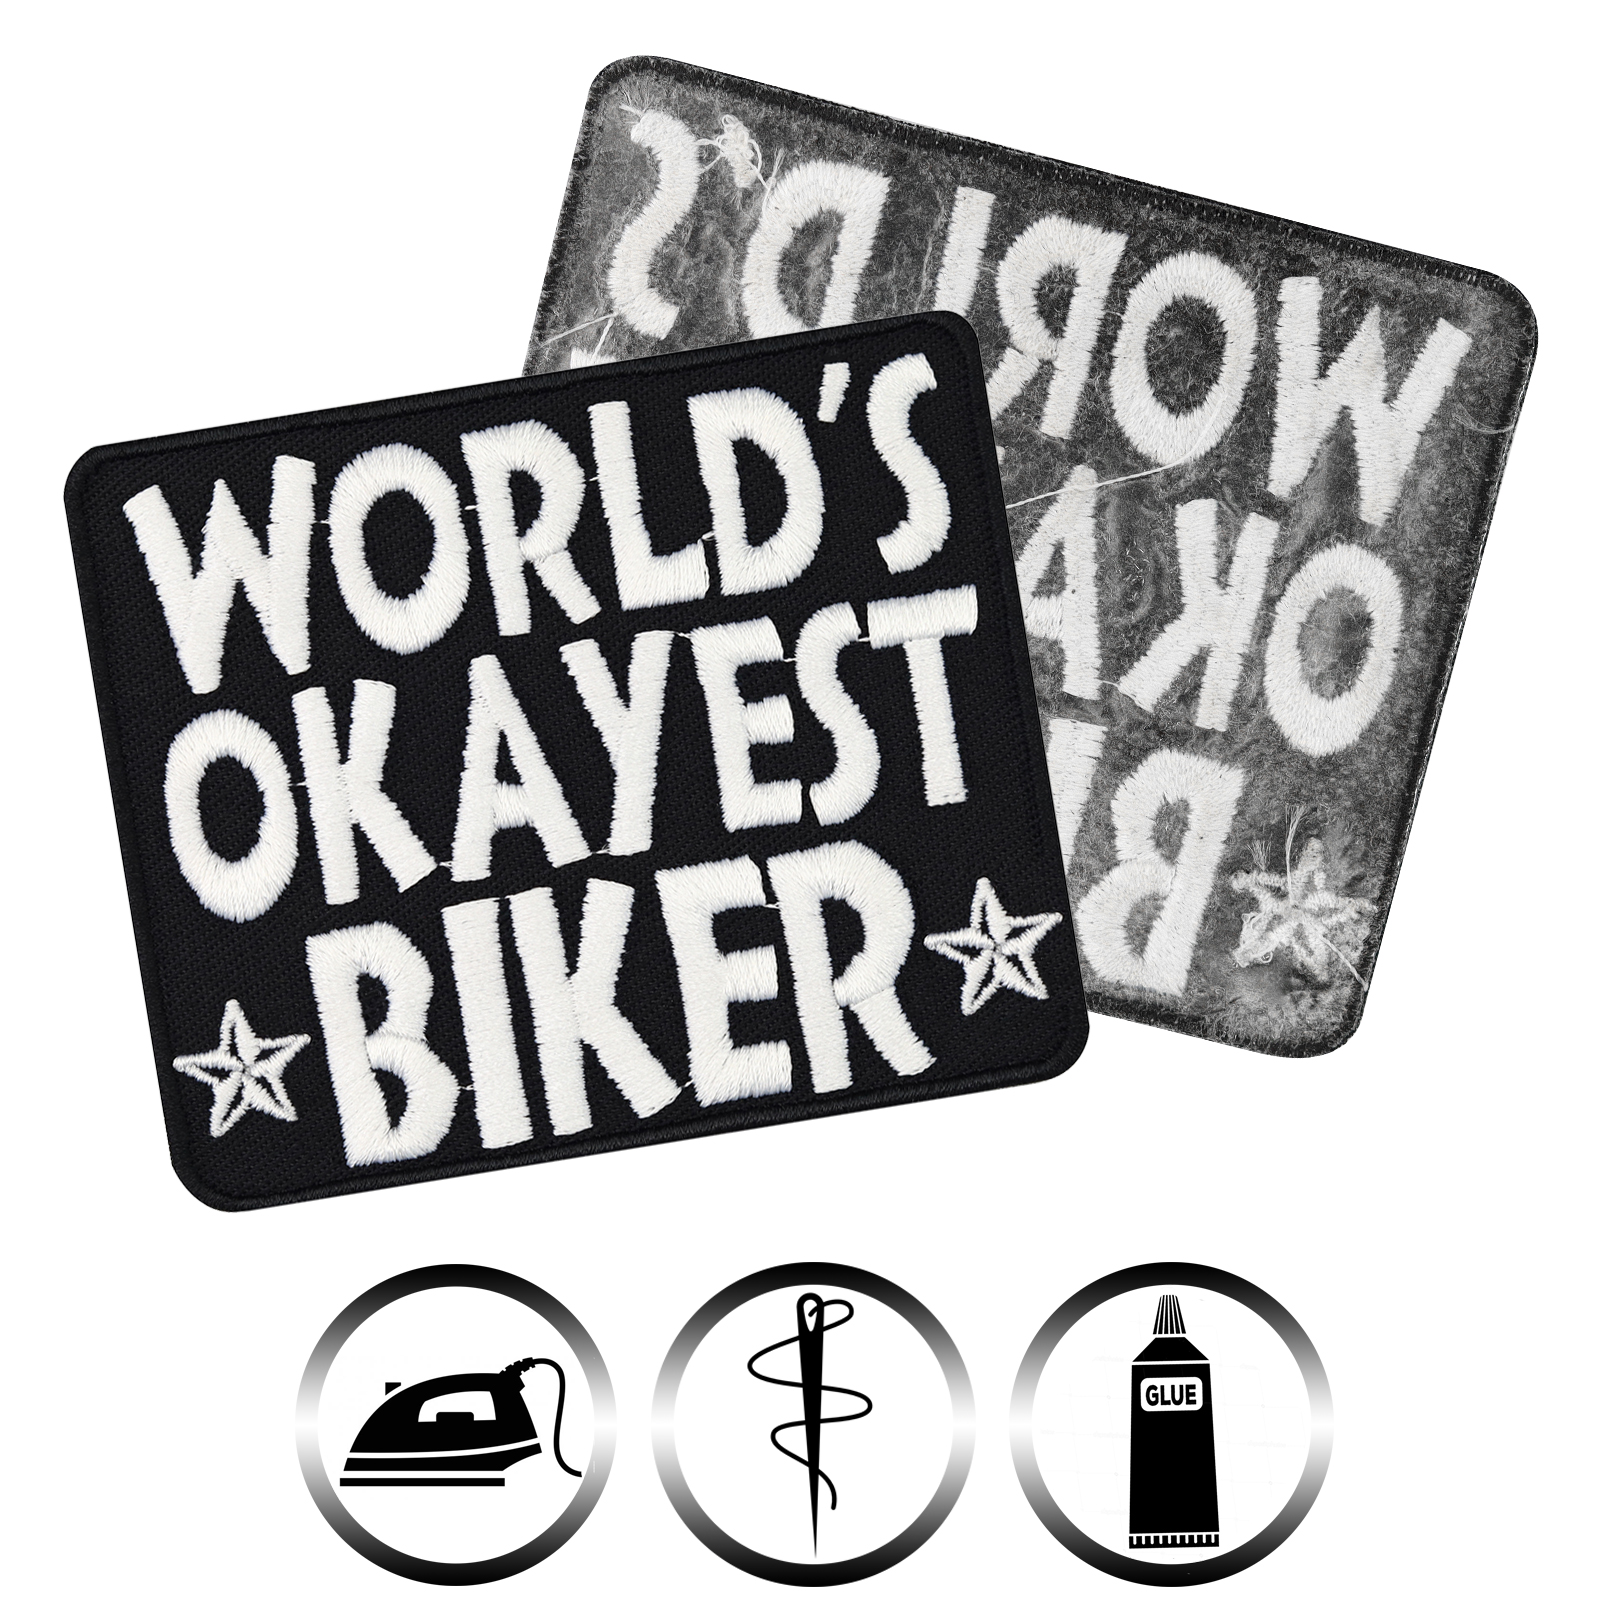 World's okayest Biker - Patch